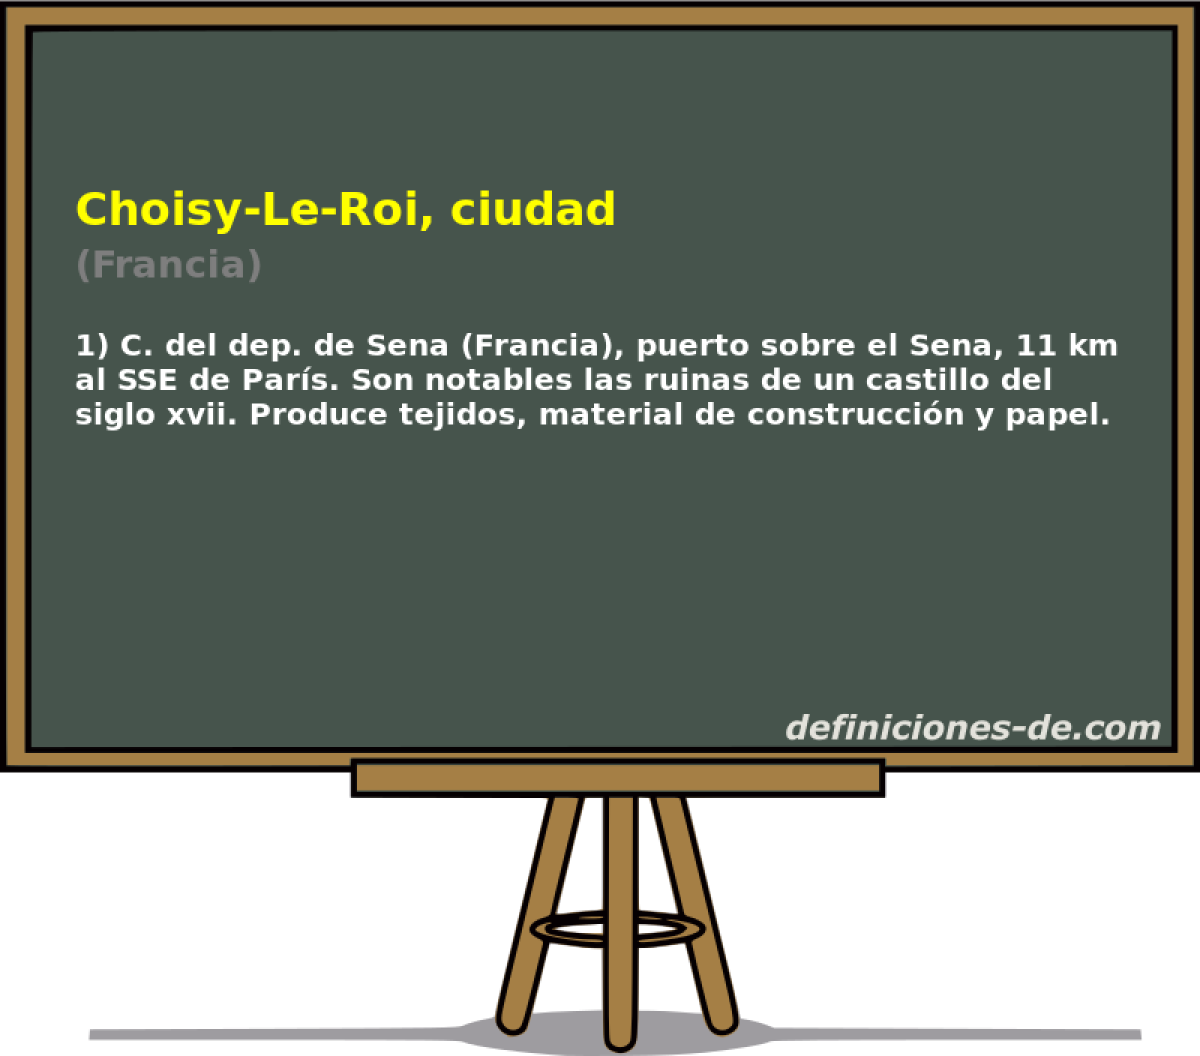 Choisy-Le-Roi, ciudad (Francia)